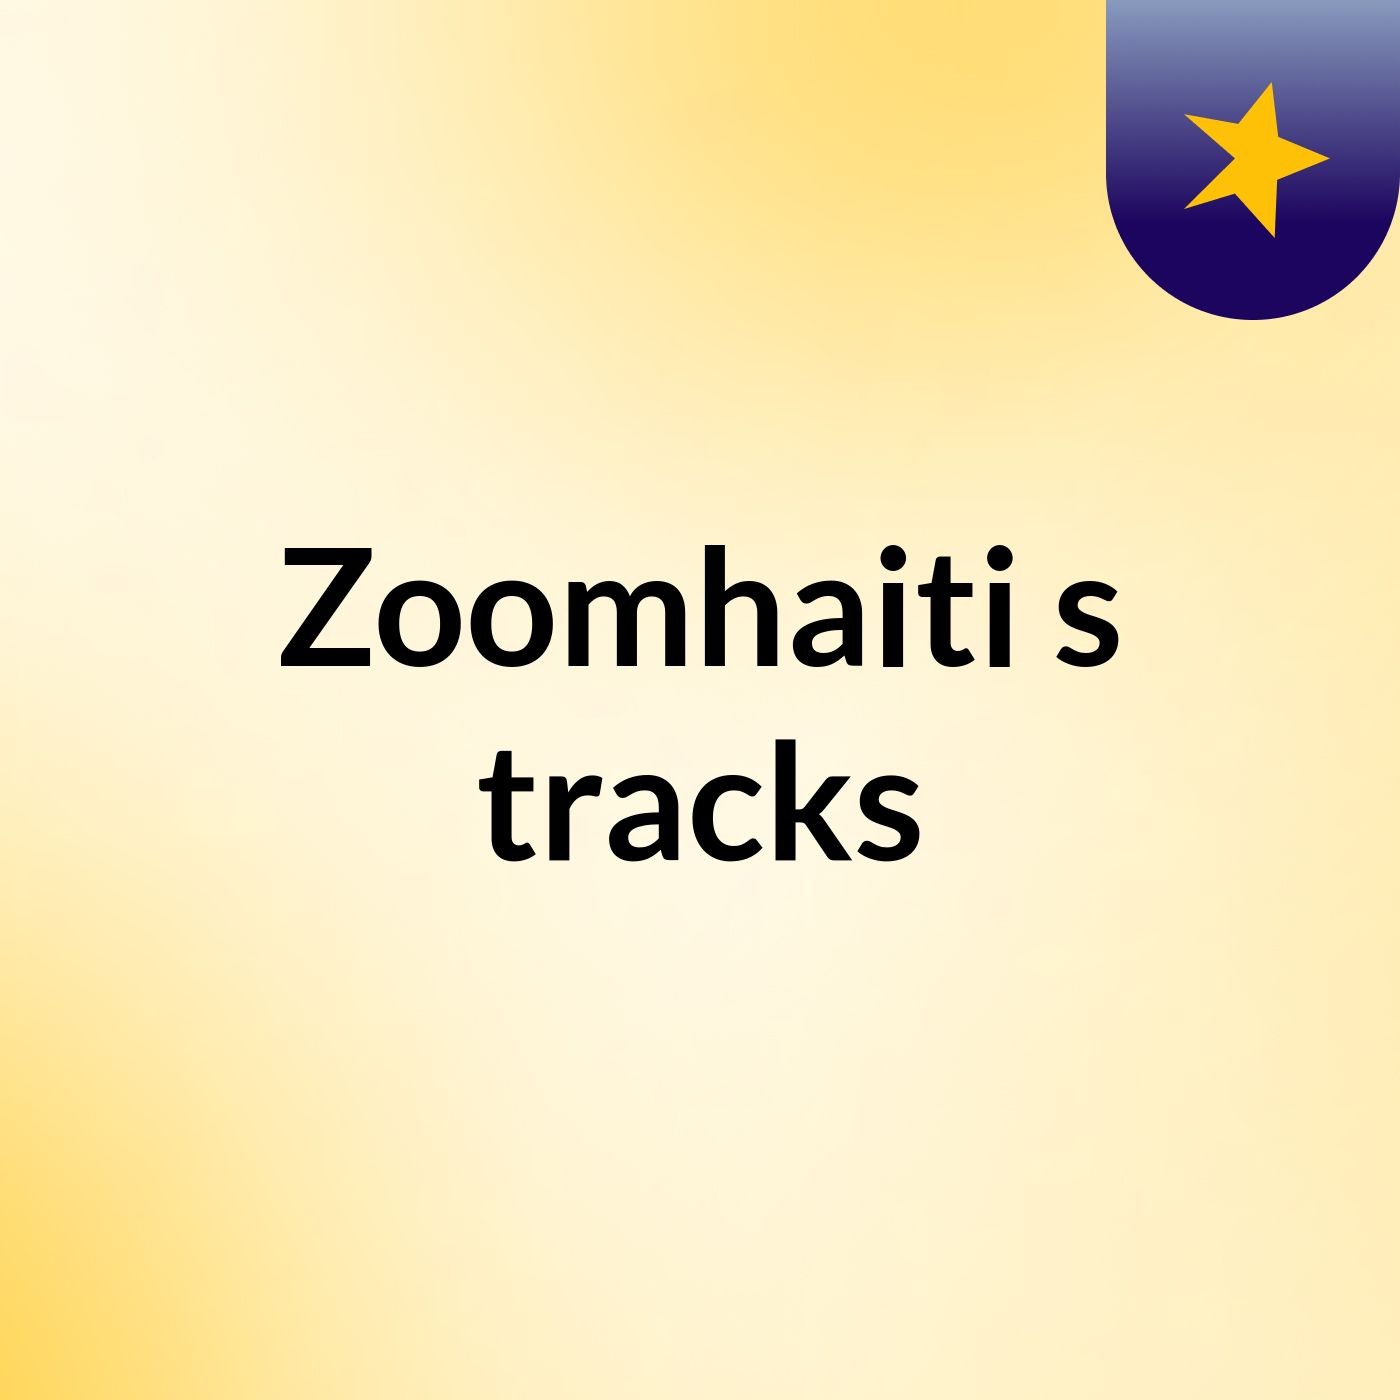 Zoomhaiti's tracks